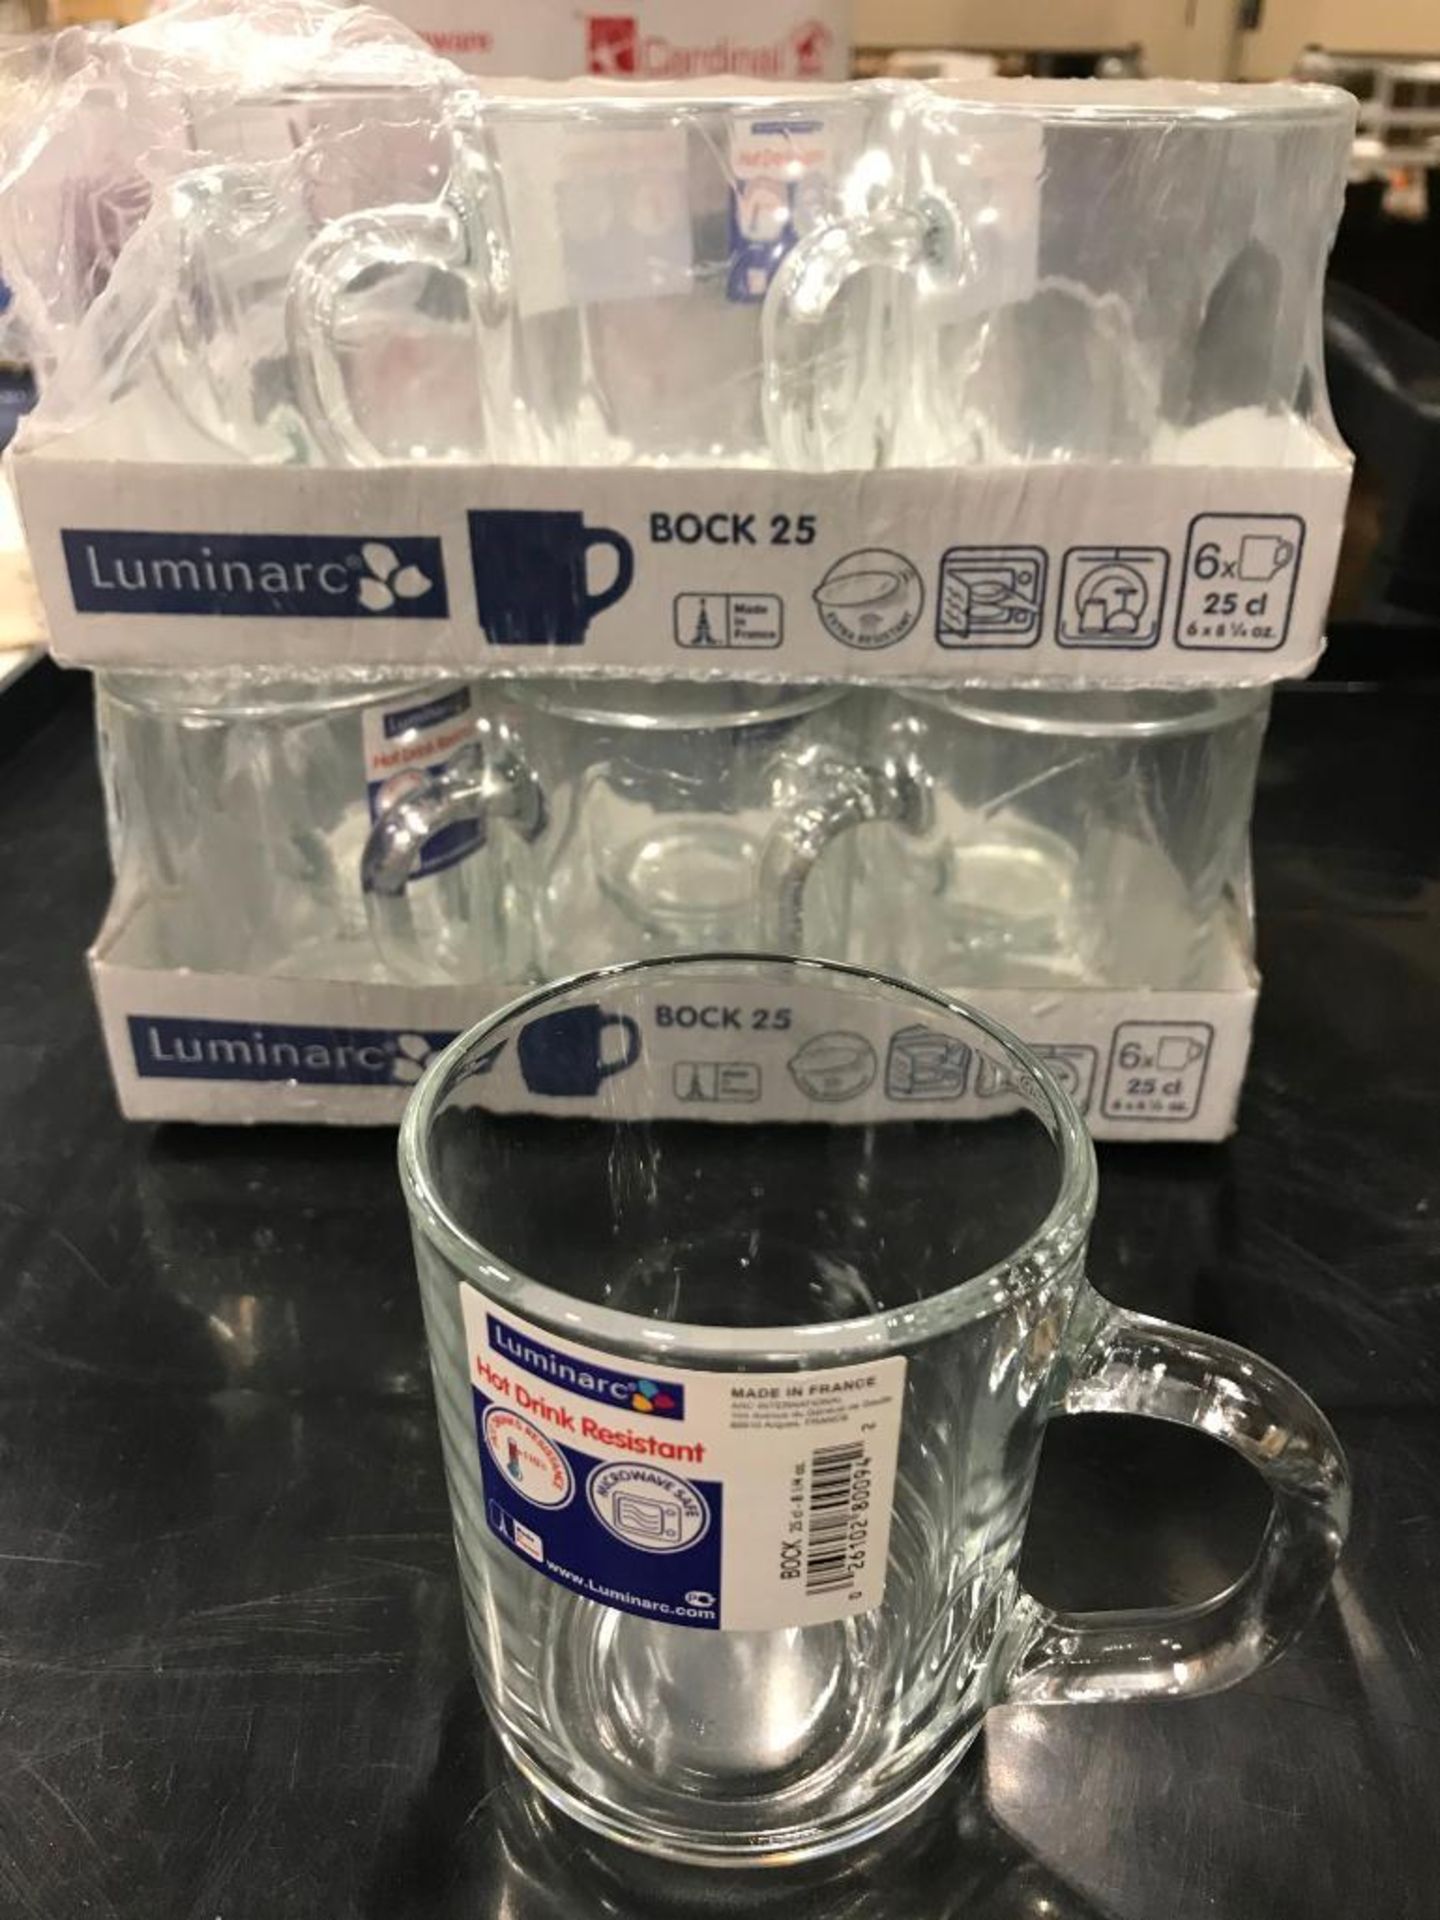 8.5OZ/250ML CLEAR GLASS MUGS - LOT OF 12, LUMINARC 39739 - NEW